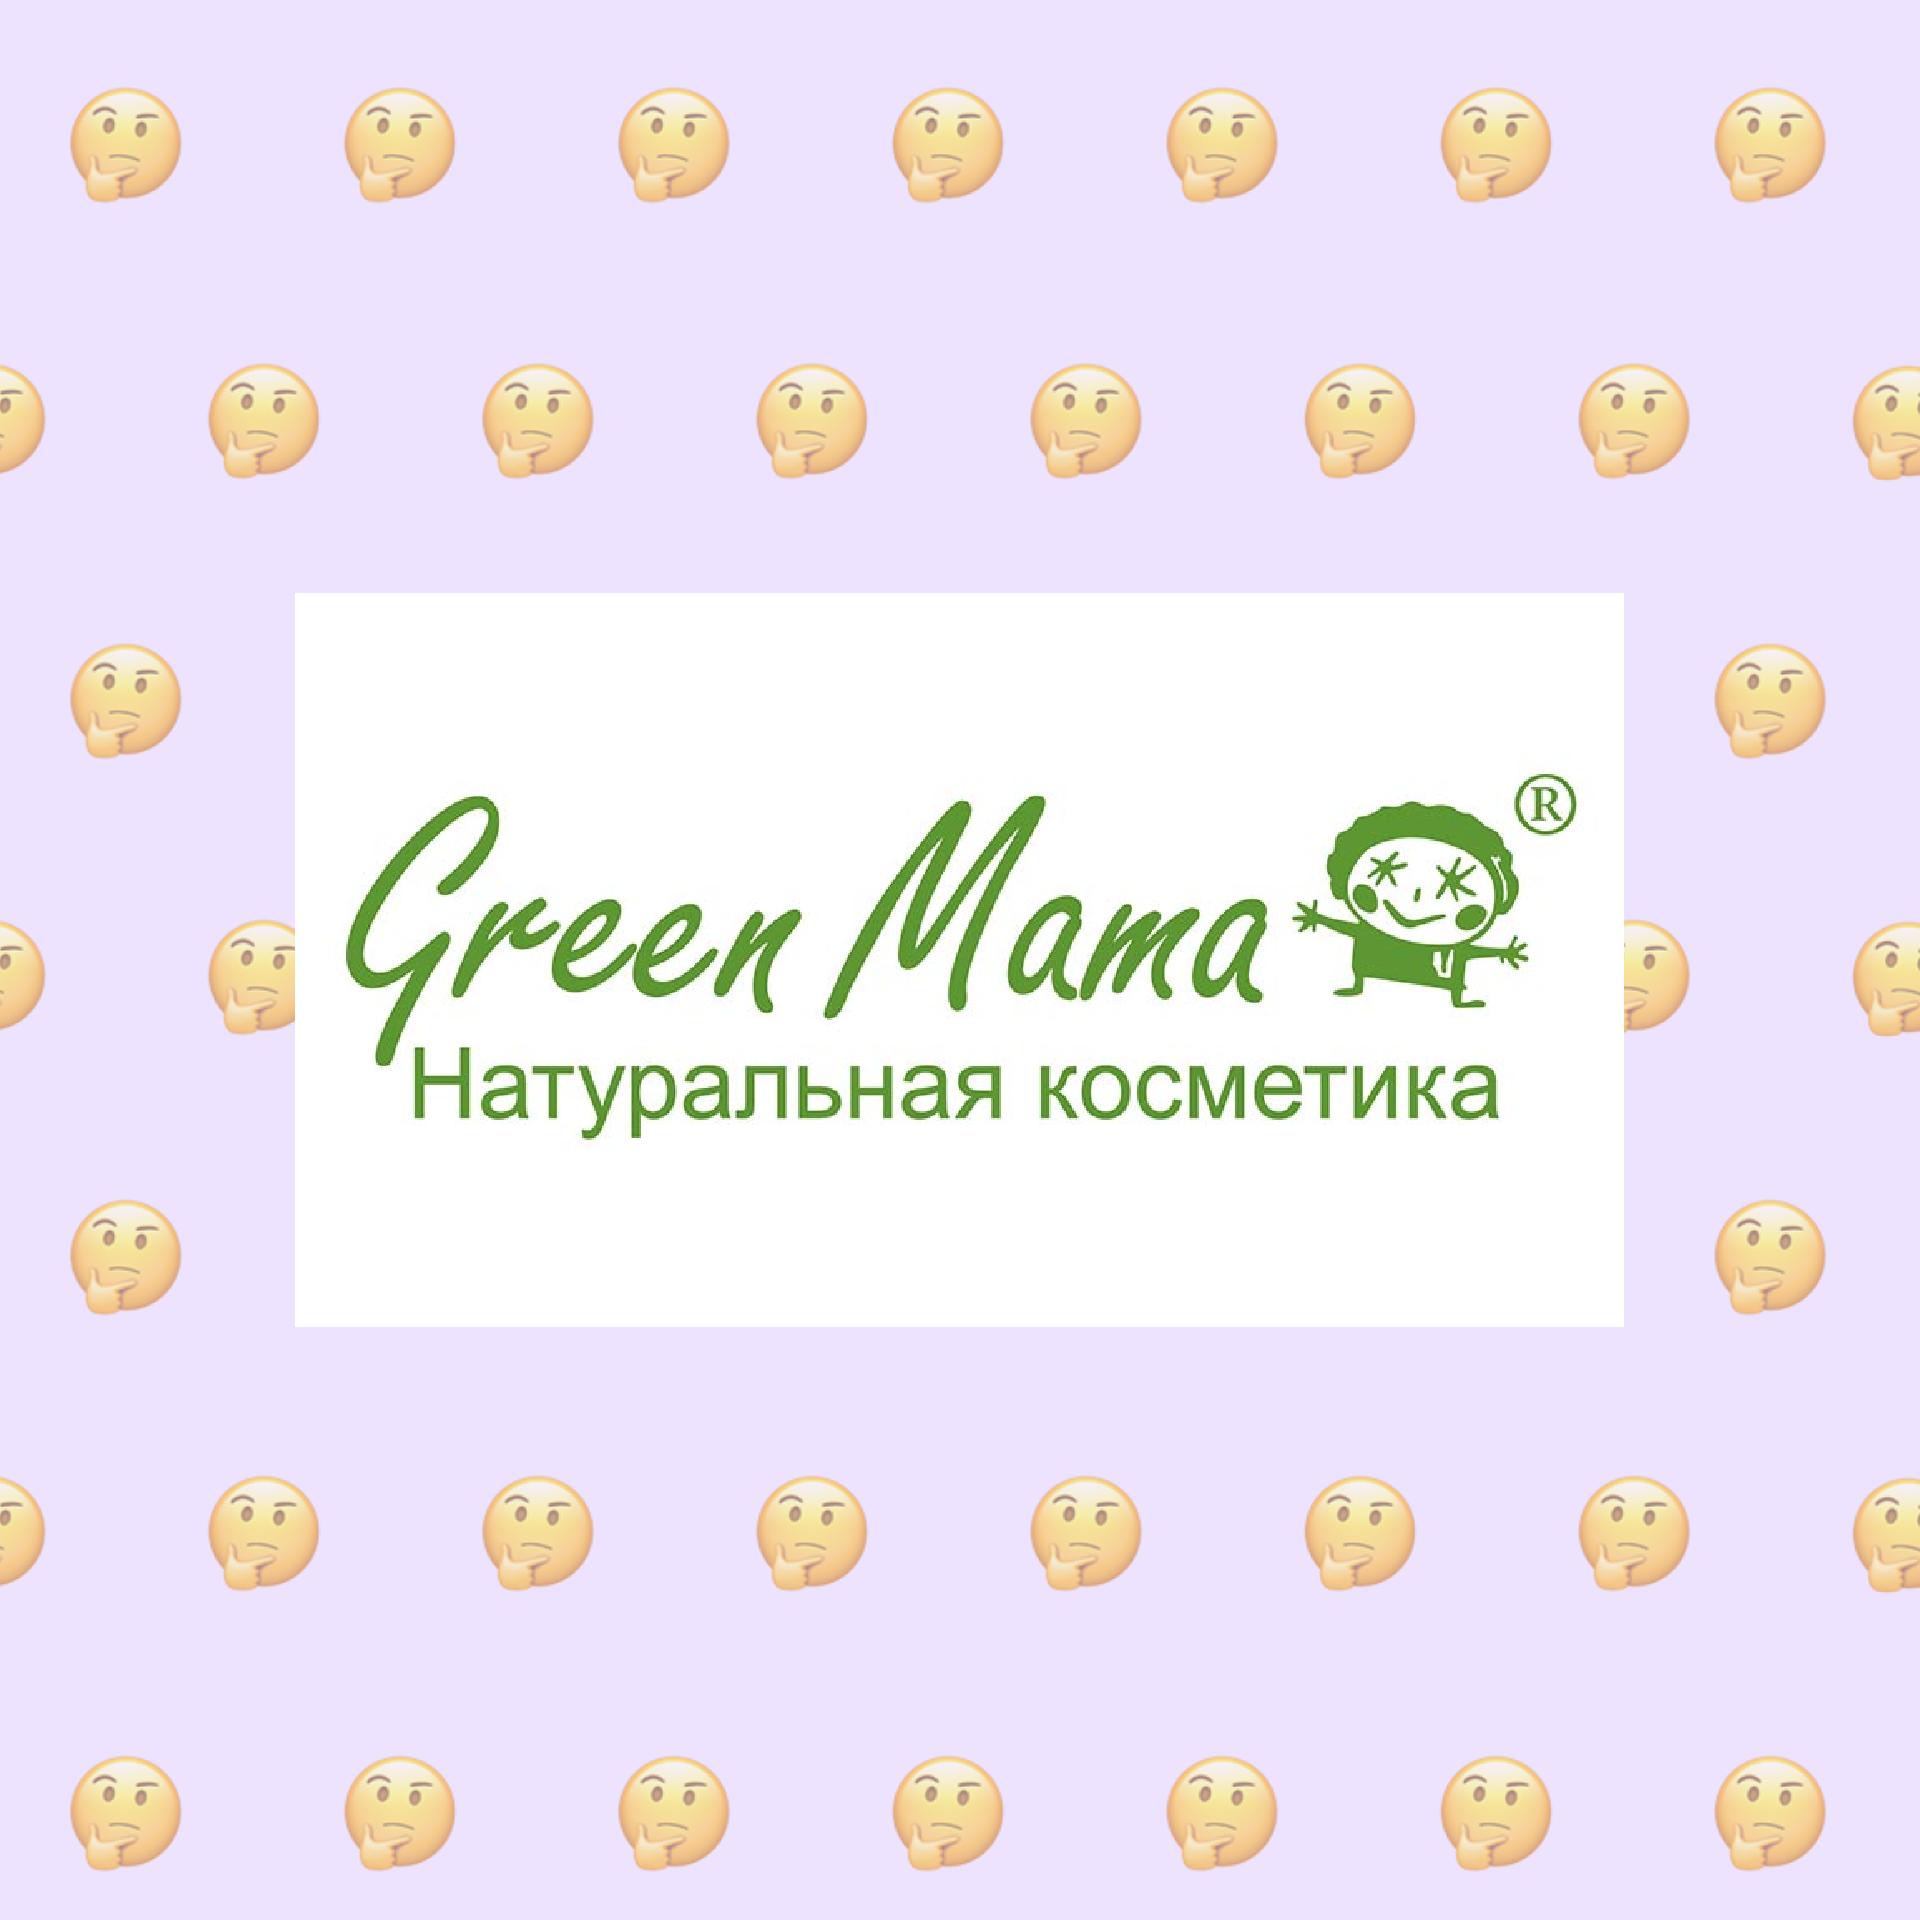 Веганская ли косметика Green Mama?